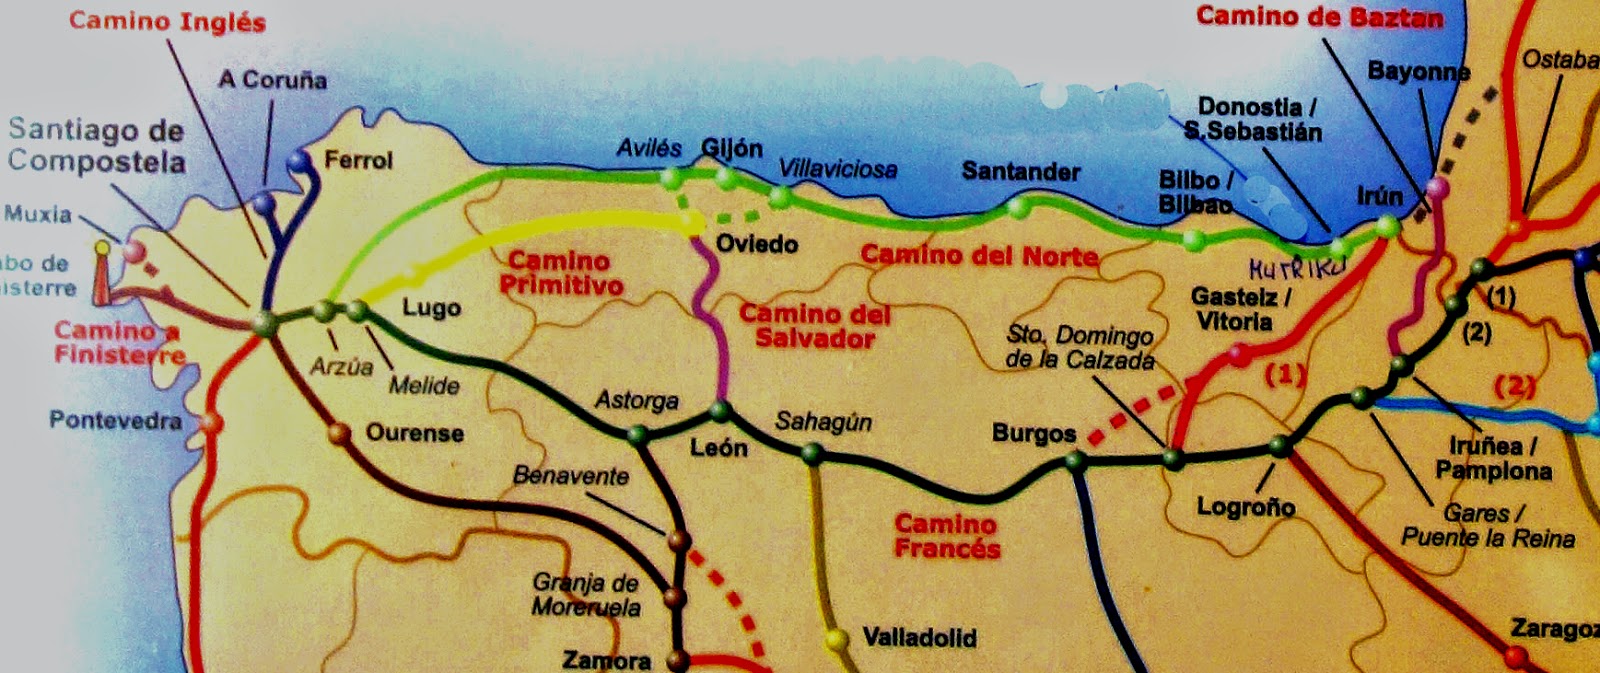 Camino del Norte 2014 Adventure: June 2014